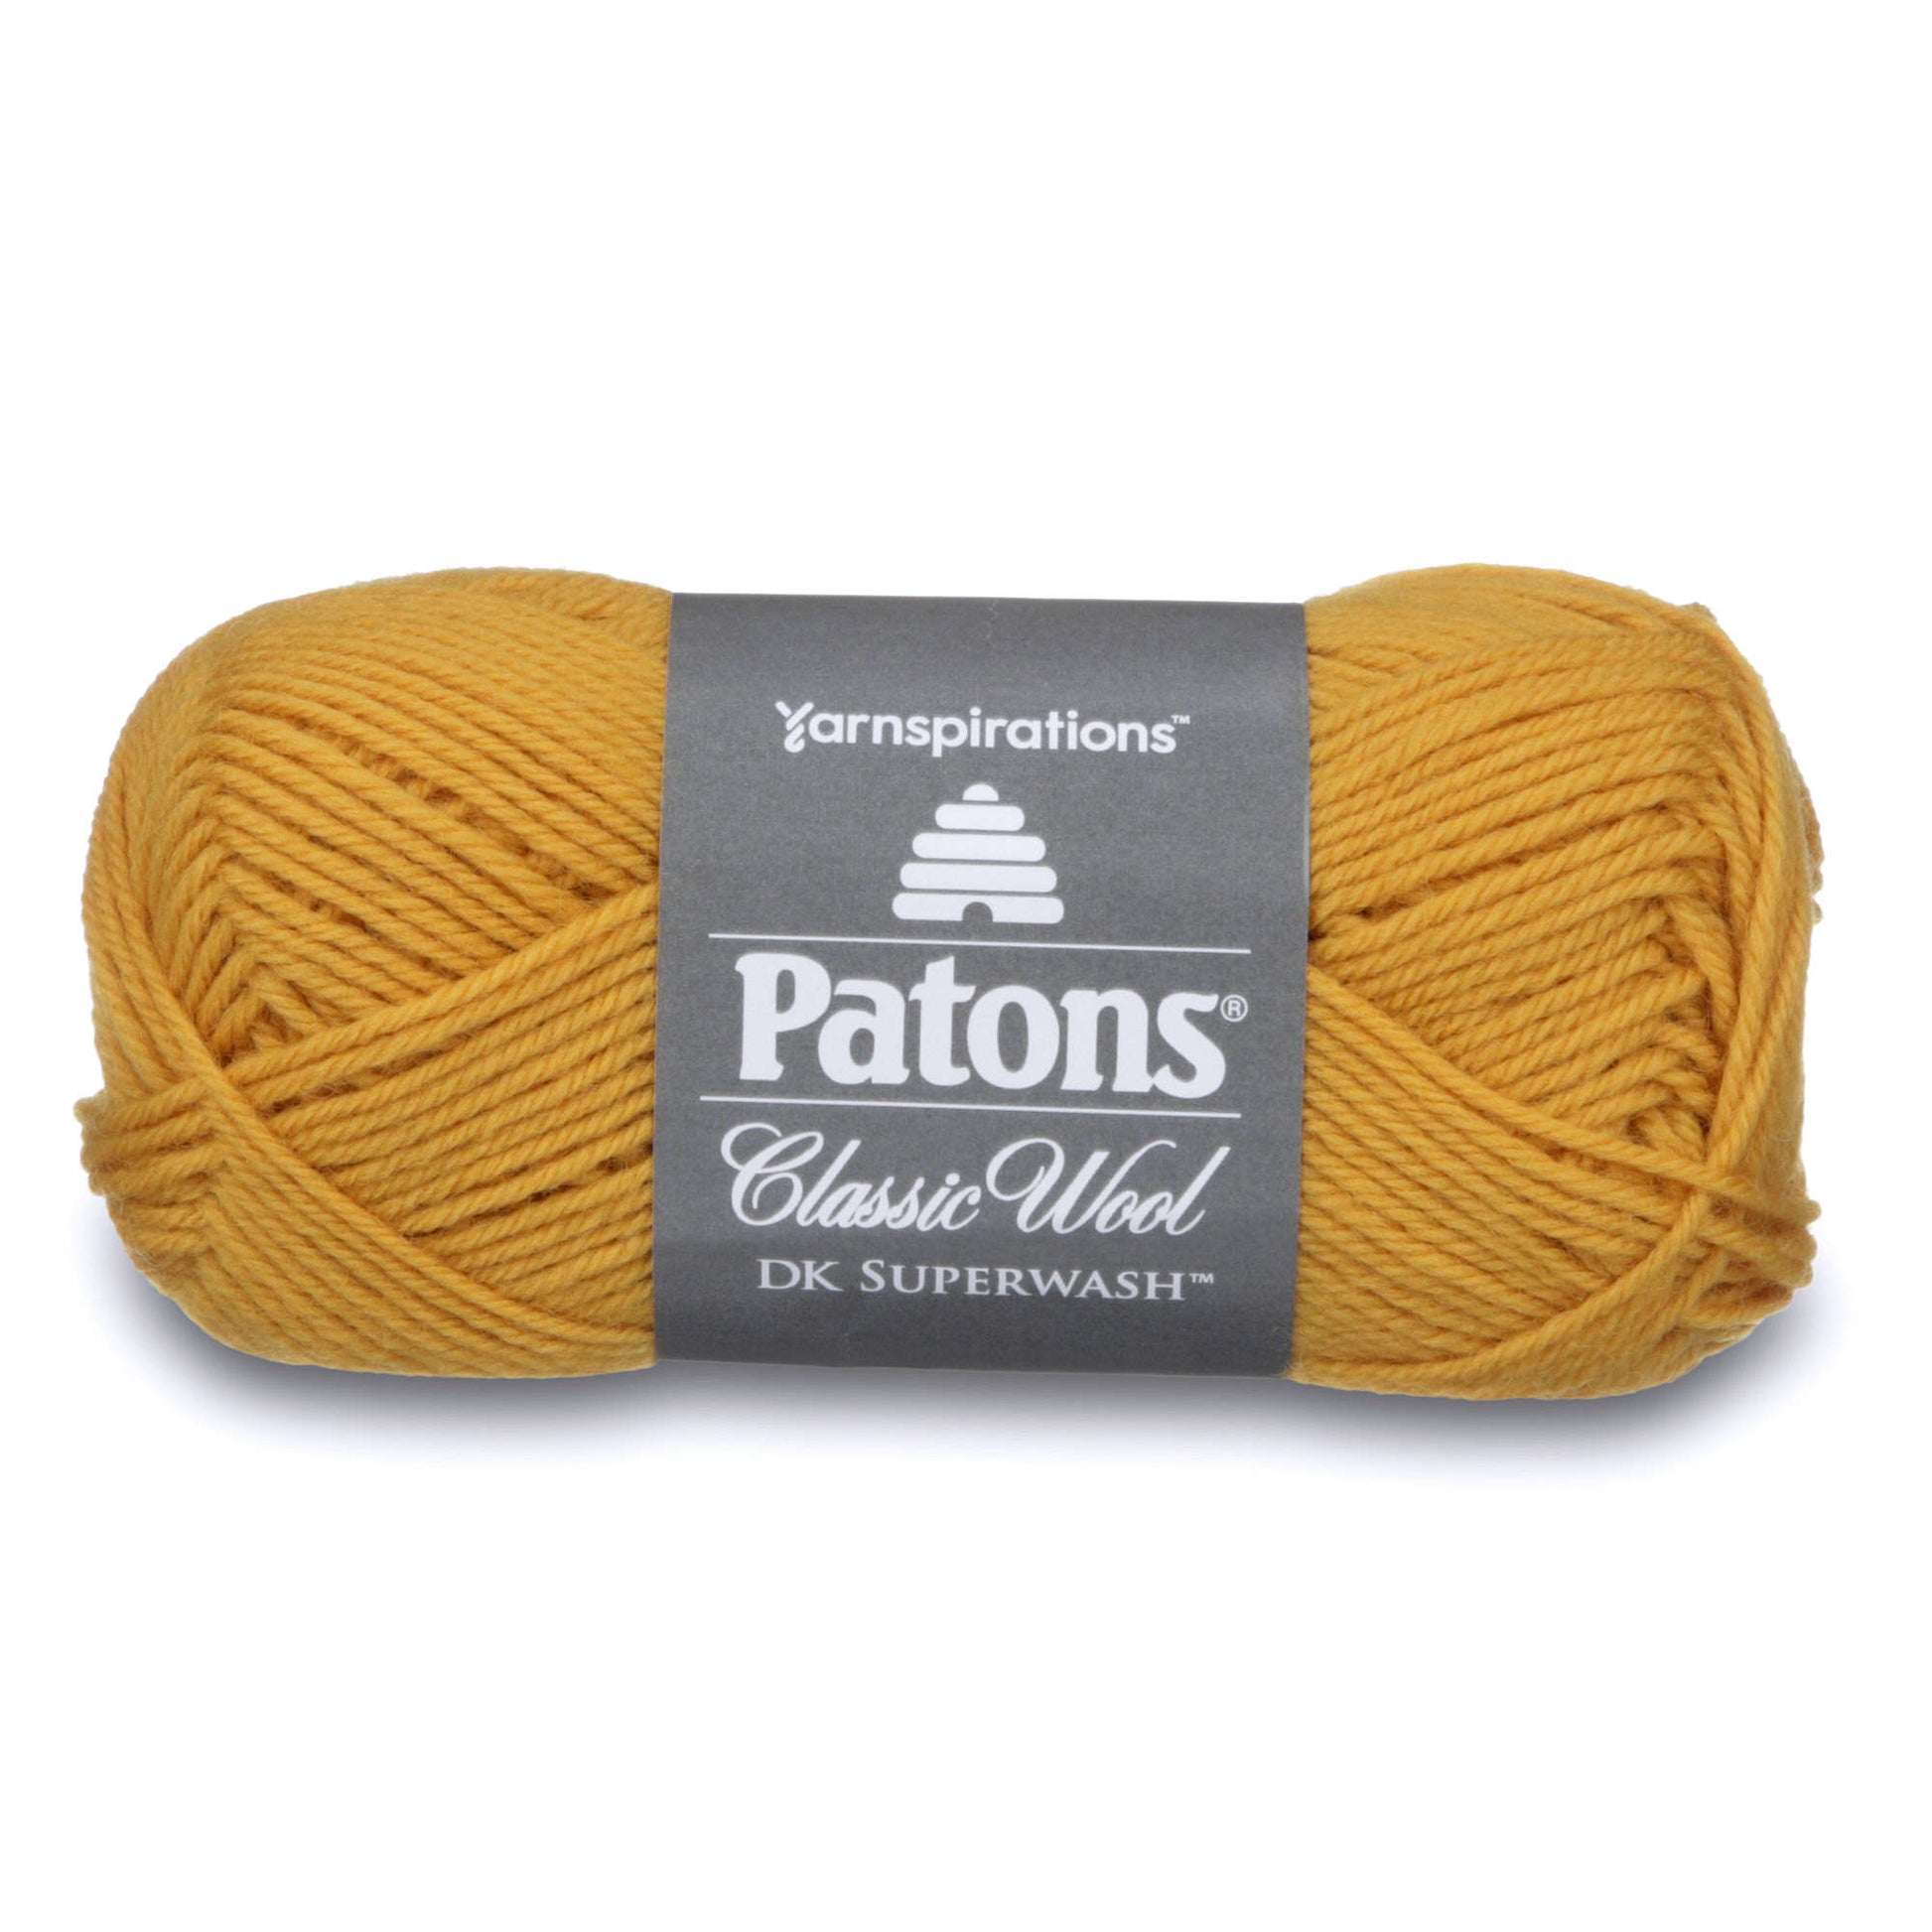 Patons Classic Wool DK Superwash Yarn - Discontinued Shades Gold